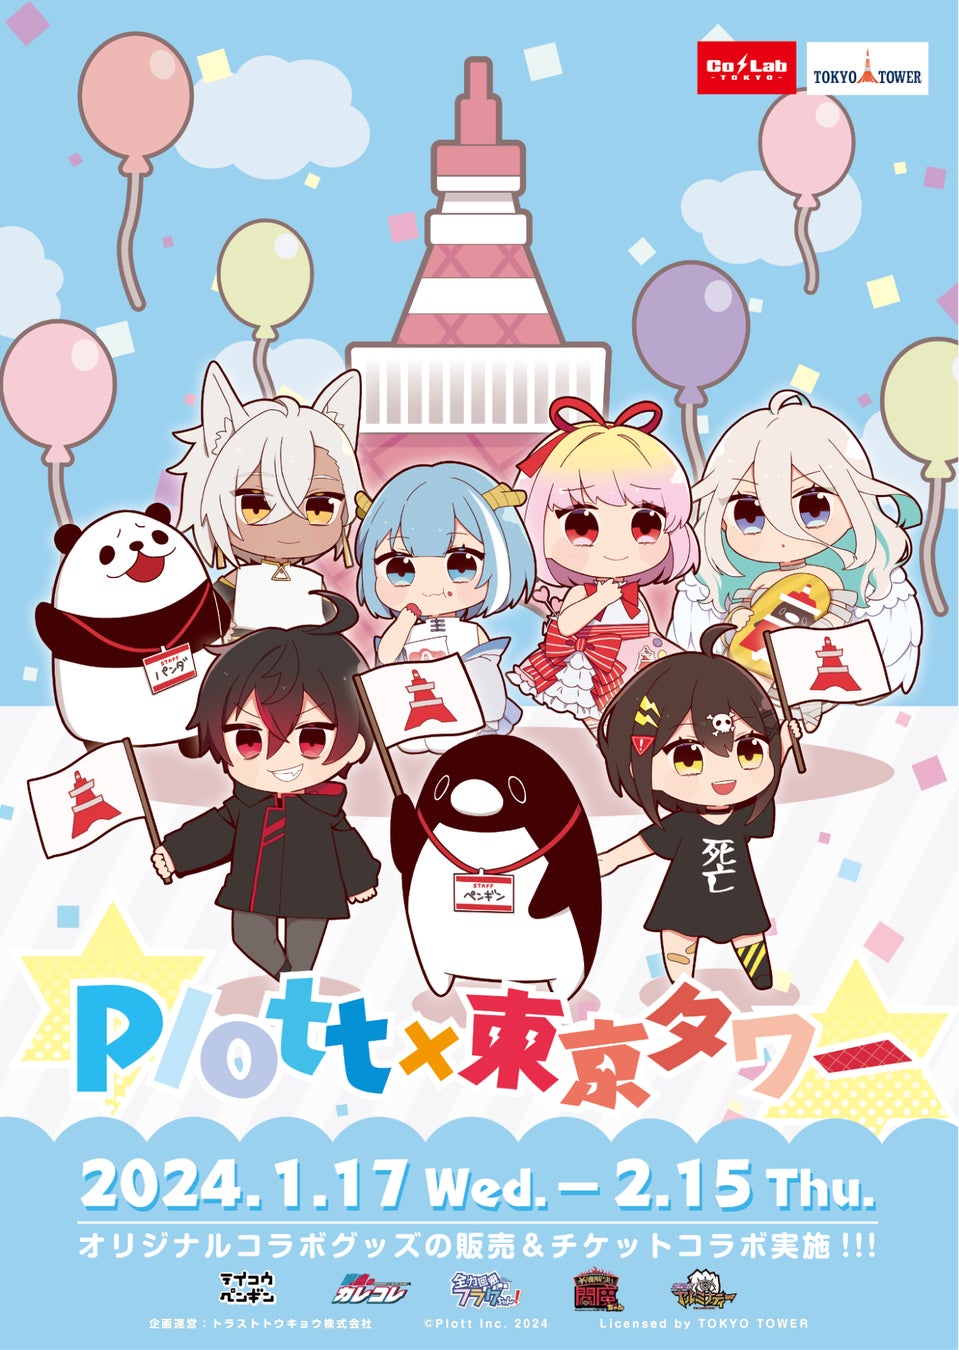 Plottと東京タワーのコラボイベント「Plott×東京タワー」が1月17日よりスタート！